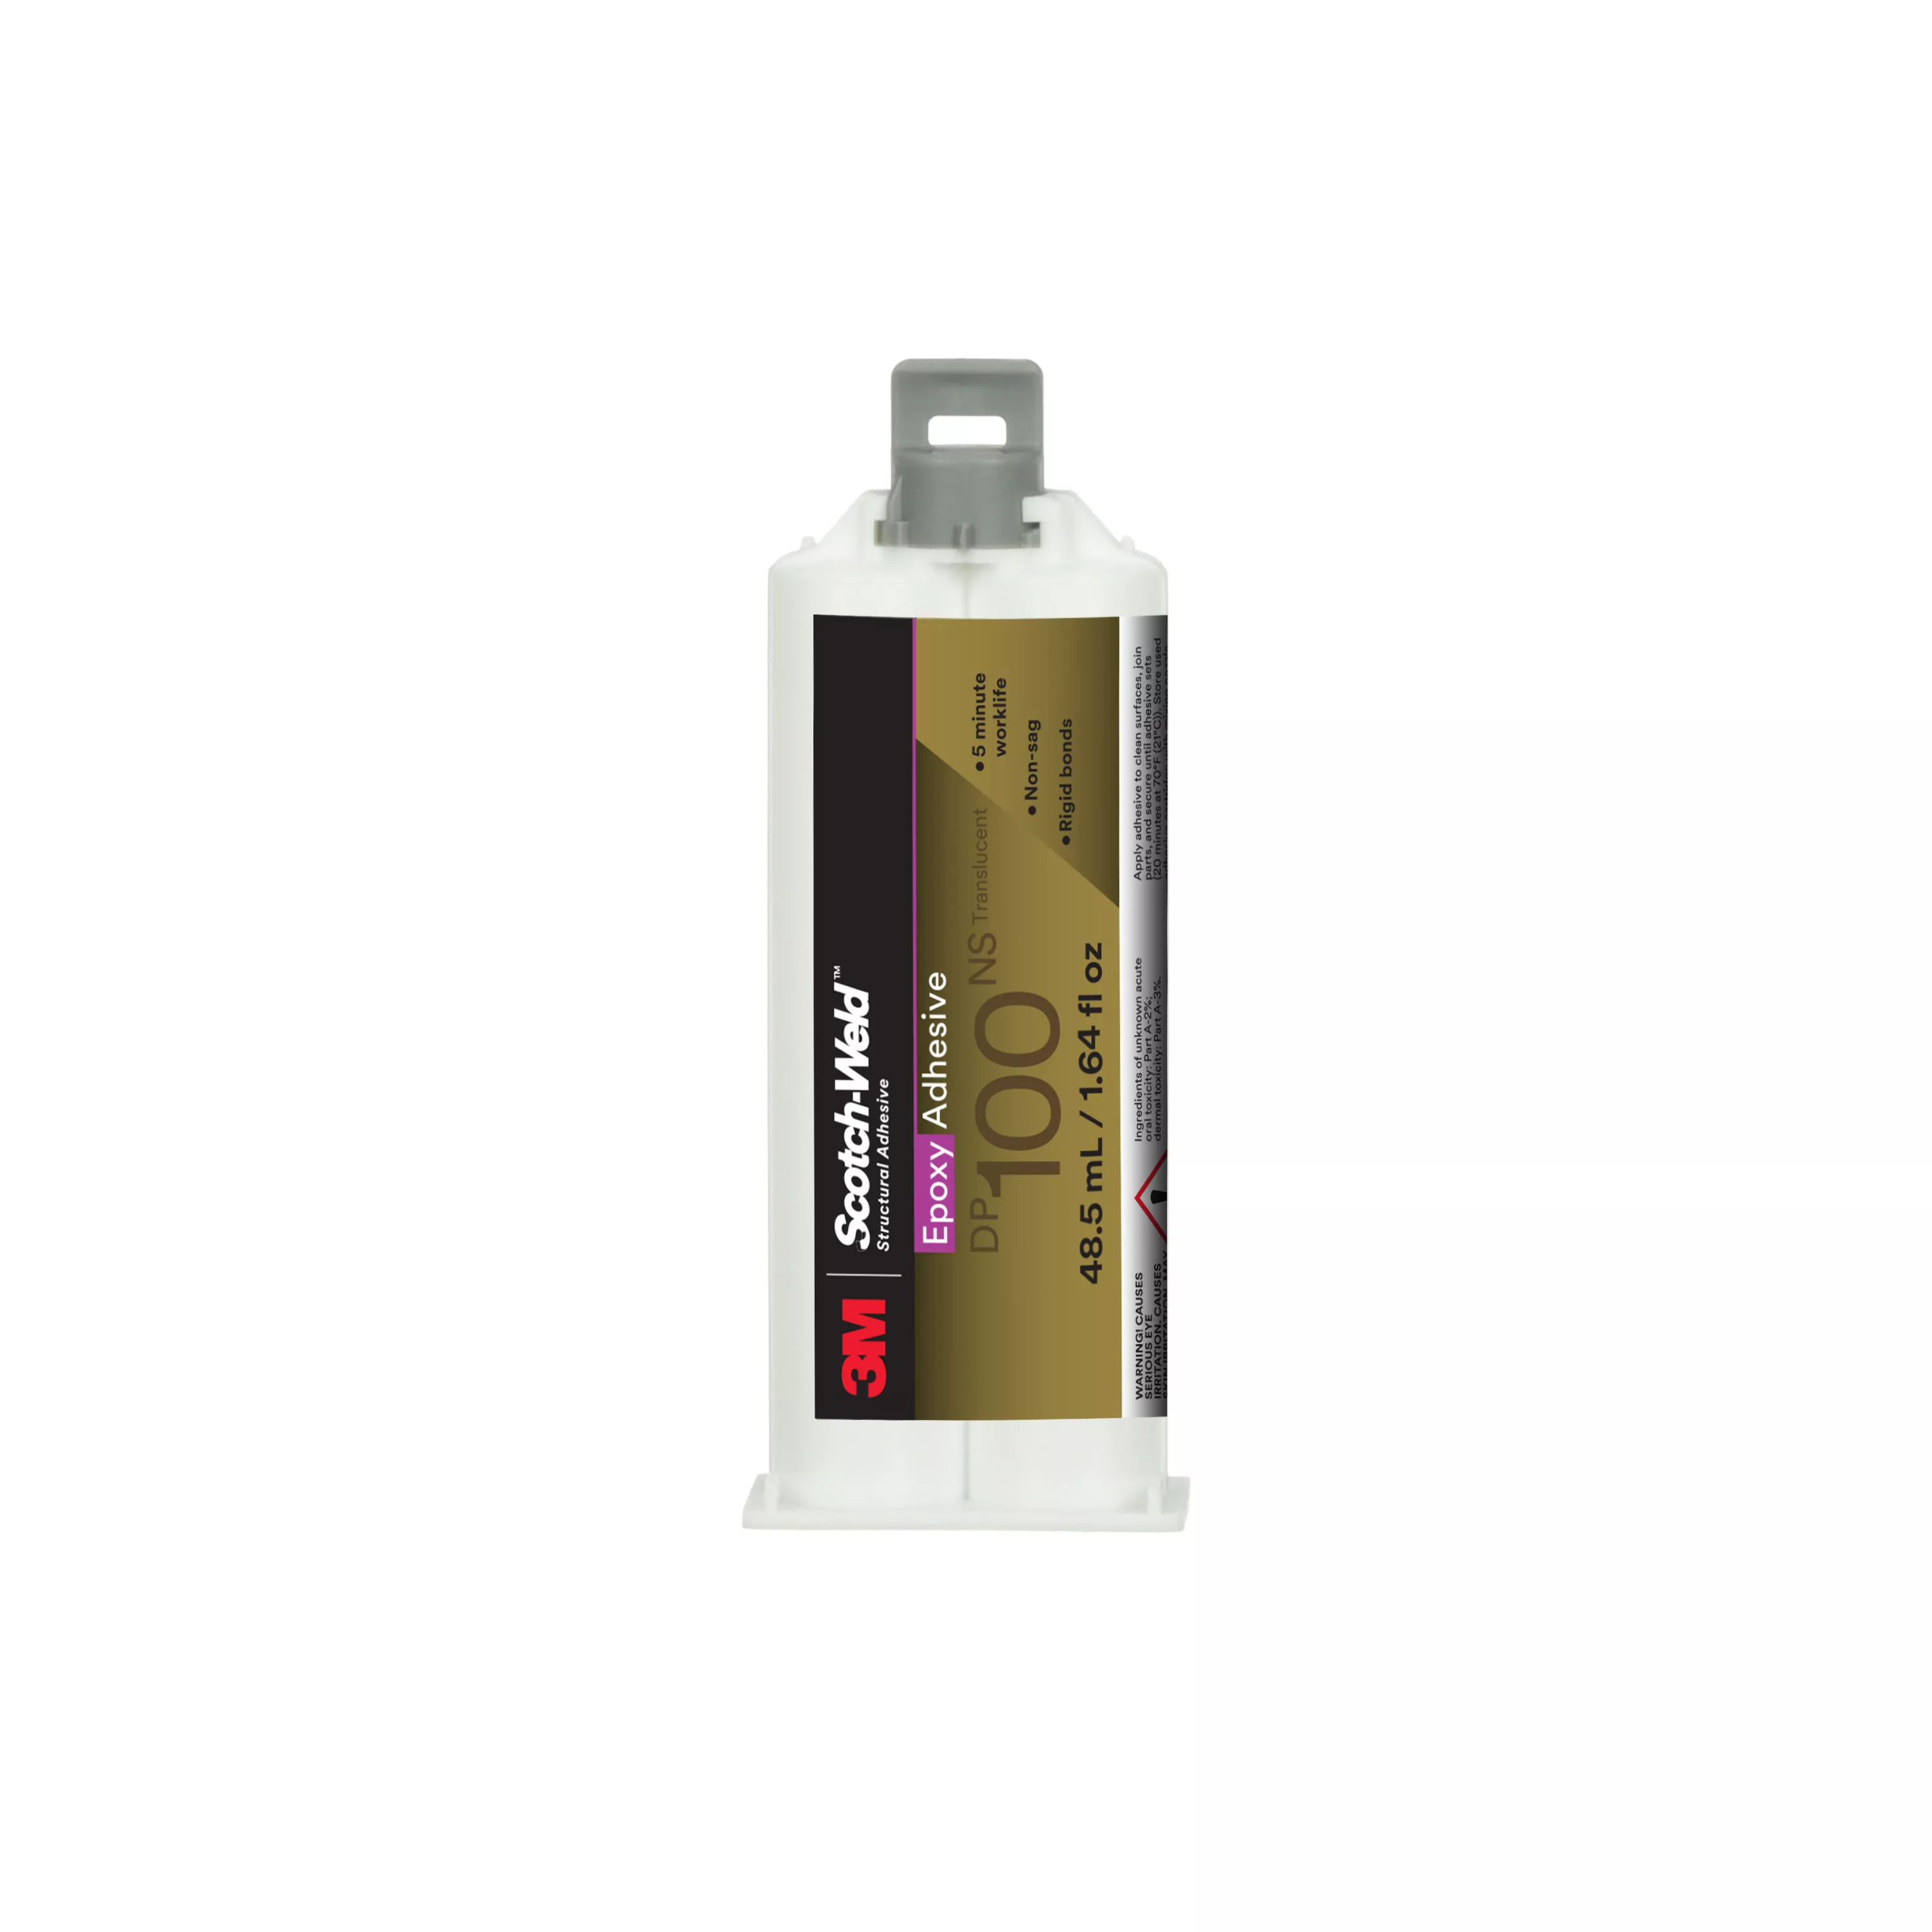 3M™ Scotch-Weld™ Epoxy Adhesive DP100NS, Translucent, 48.5 mL Duo-Pak,
12/Case